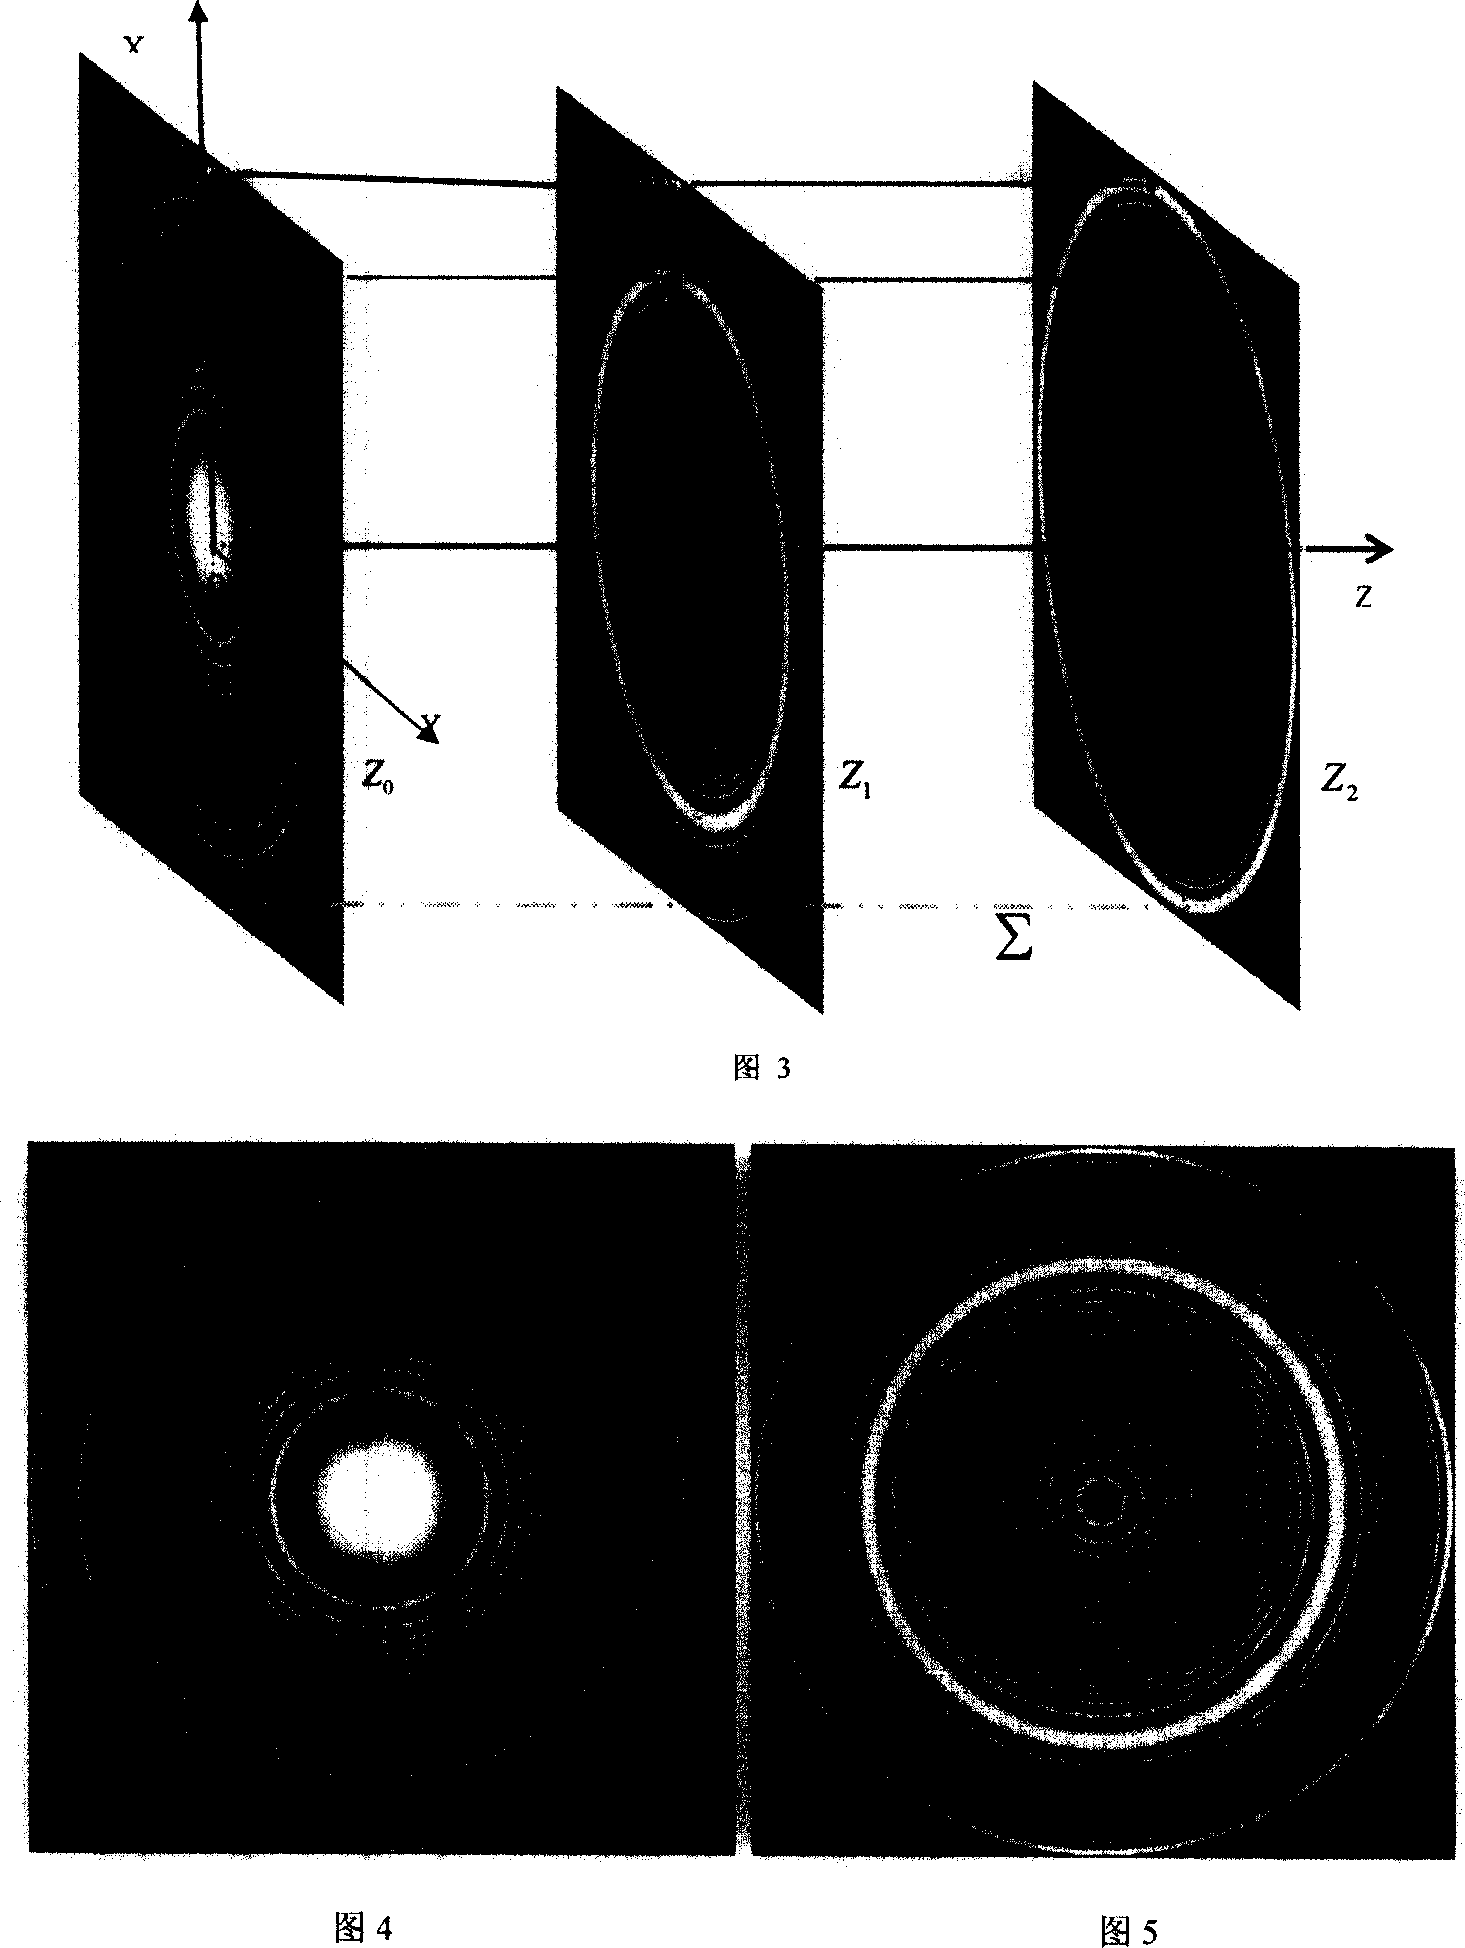 Omnibearing detection method for large-diameter aspherical mirror